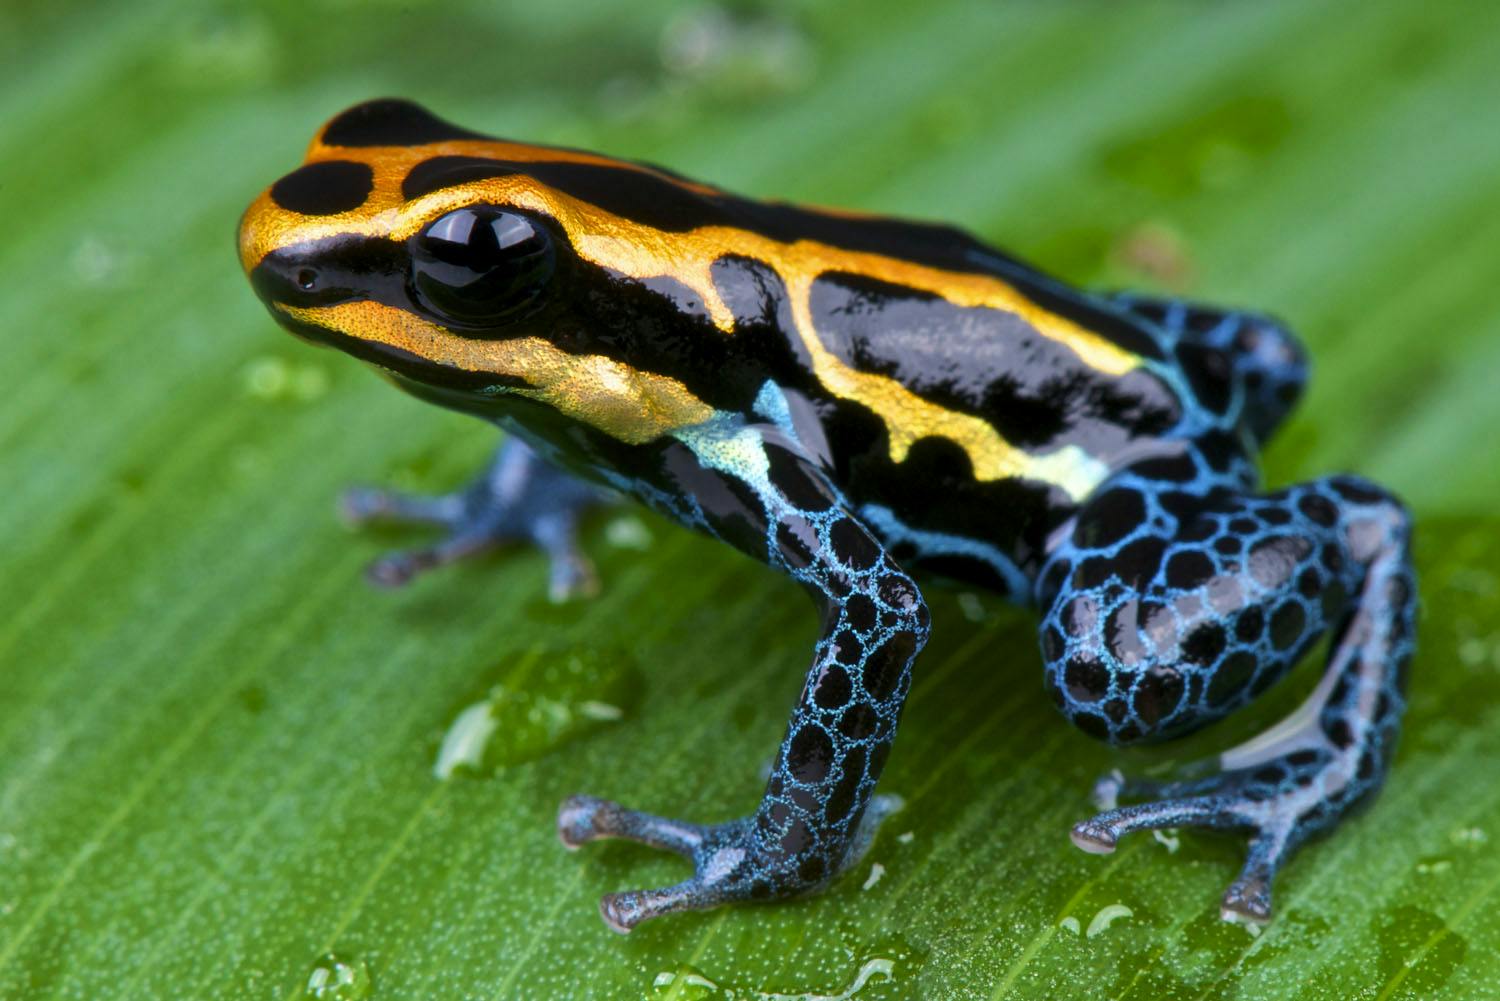 Amazon Rain forest - A dart frog